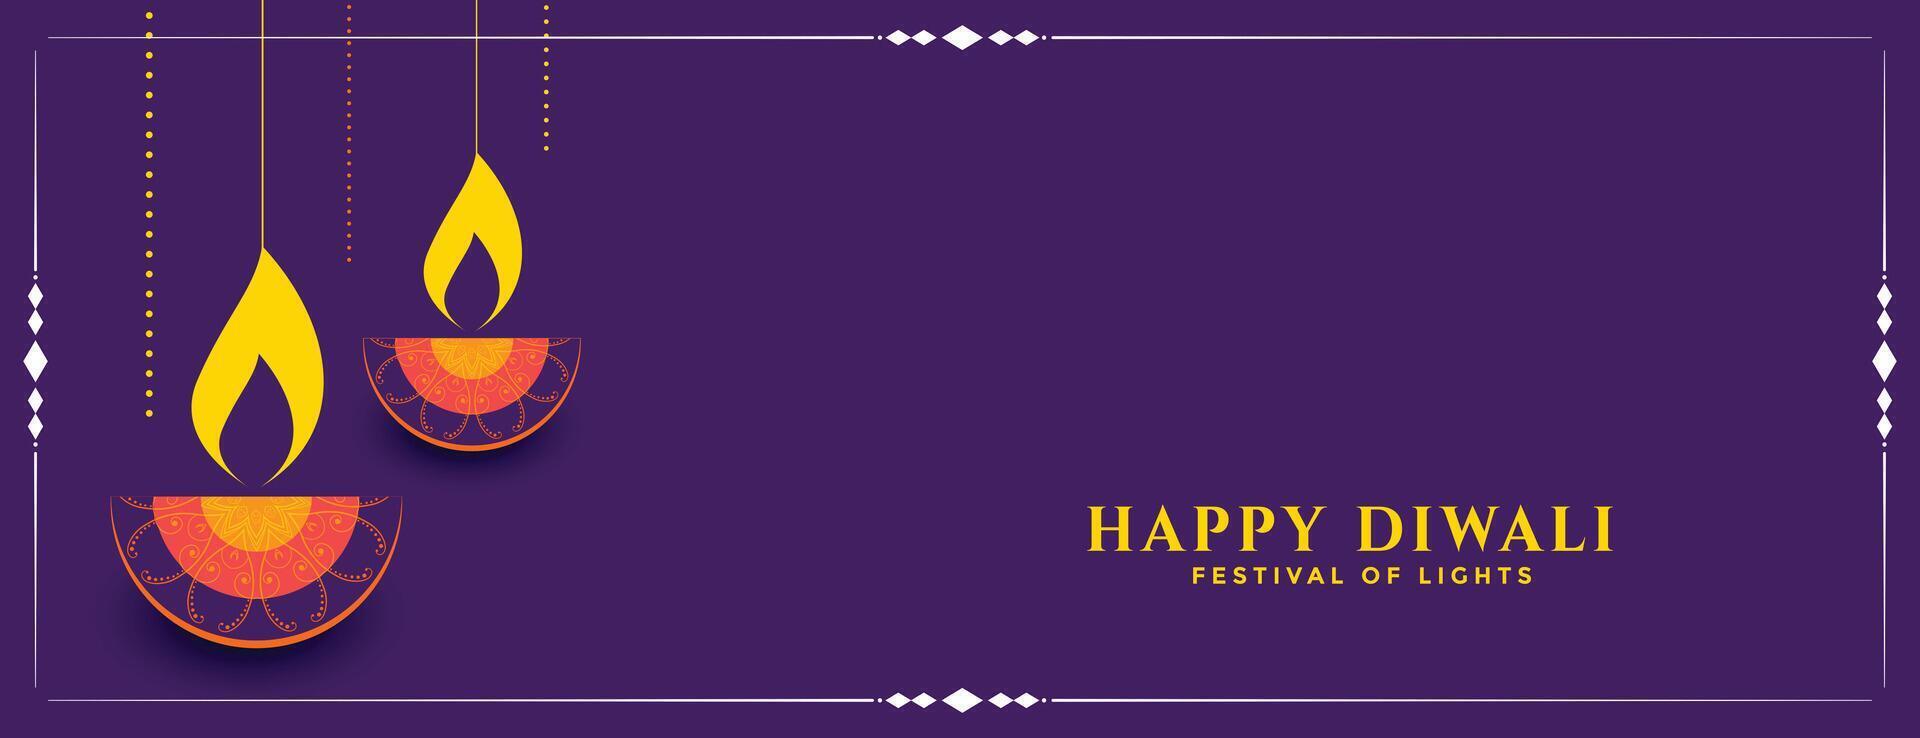 happy diwali decorative festival diya banner vector